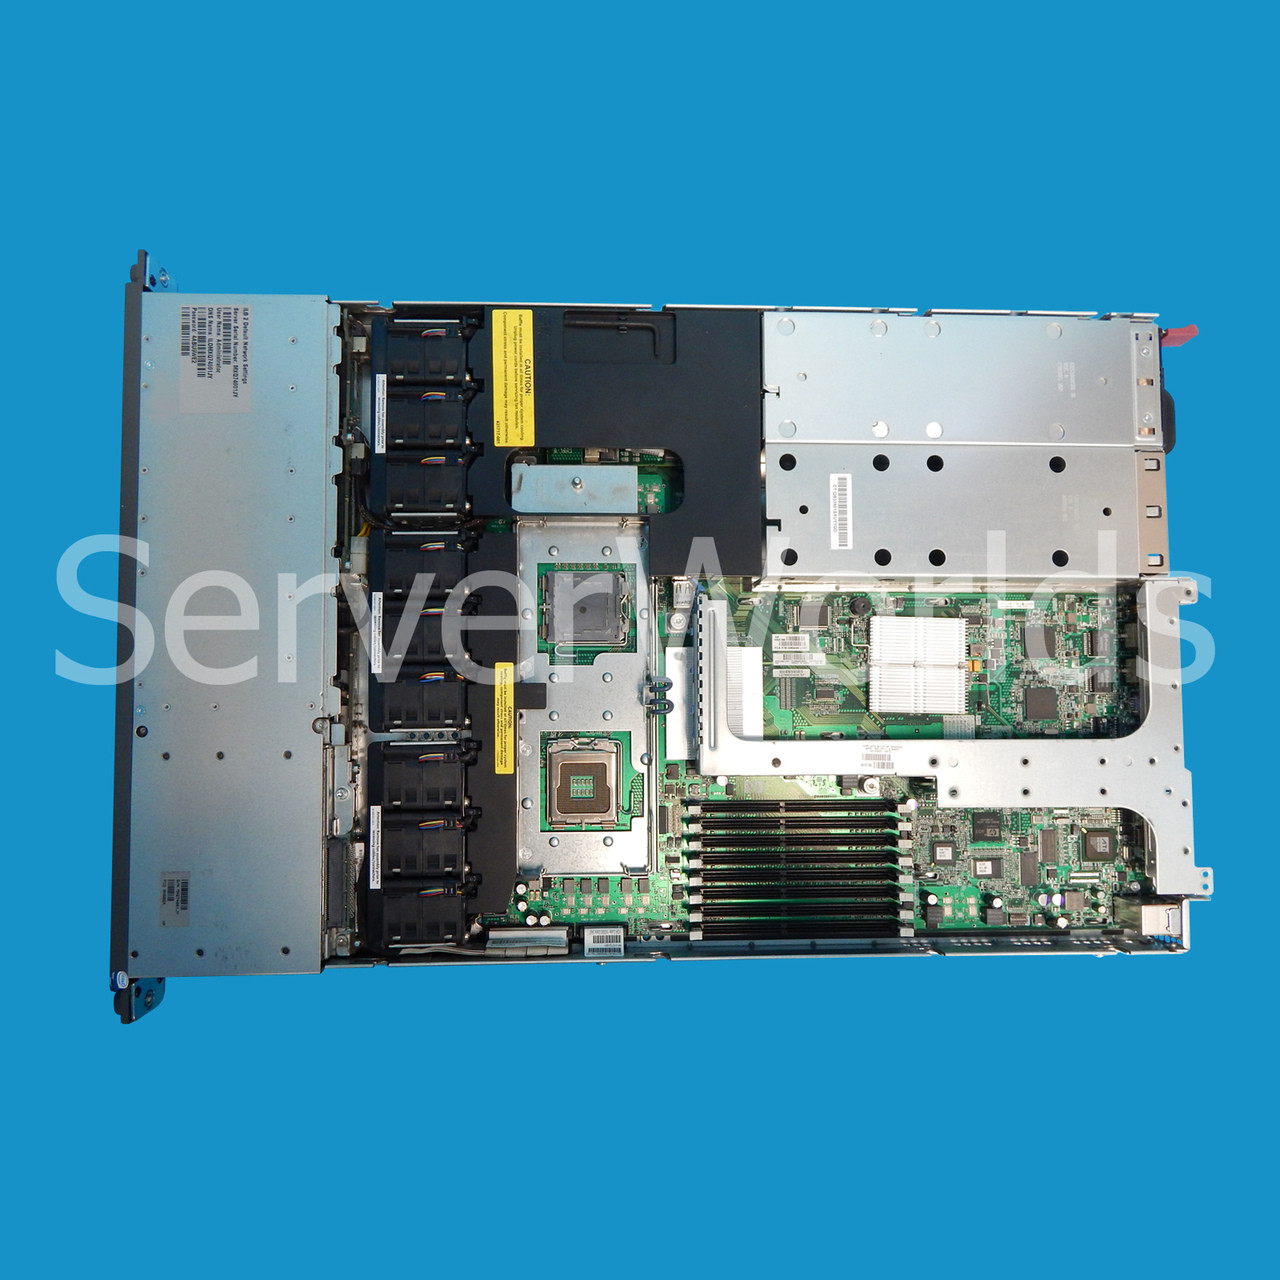 Refurbished HP DL360 G5, 1 x QC E5335 2.0Ghz, 2GB 435943-001